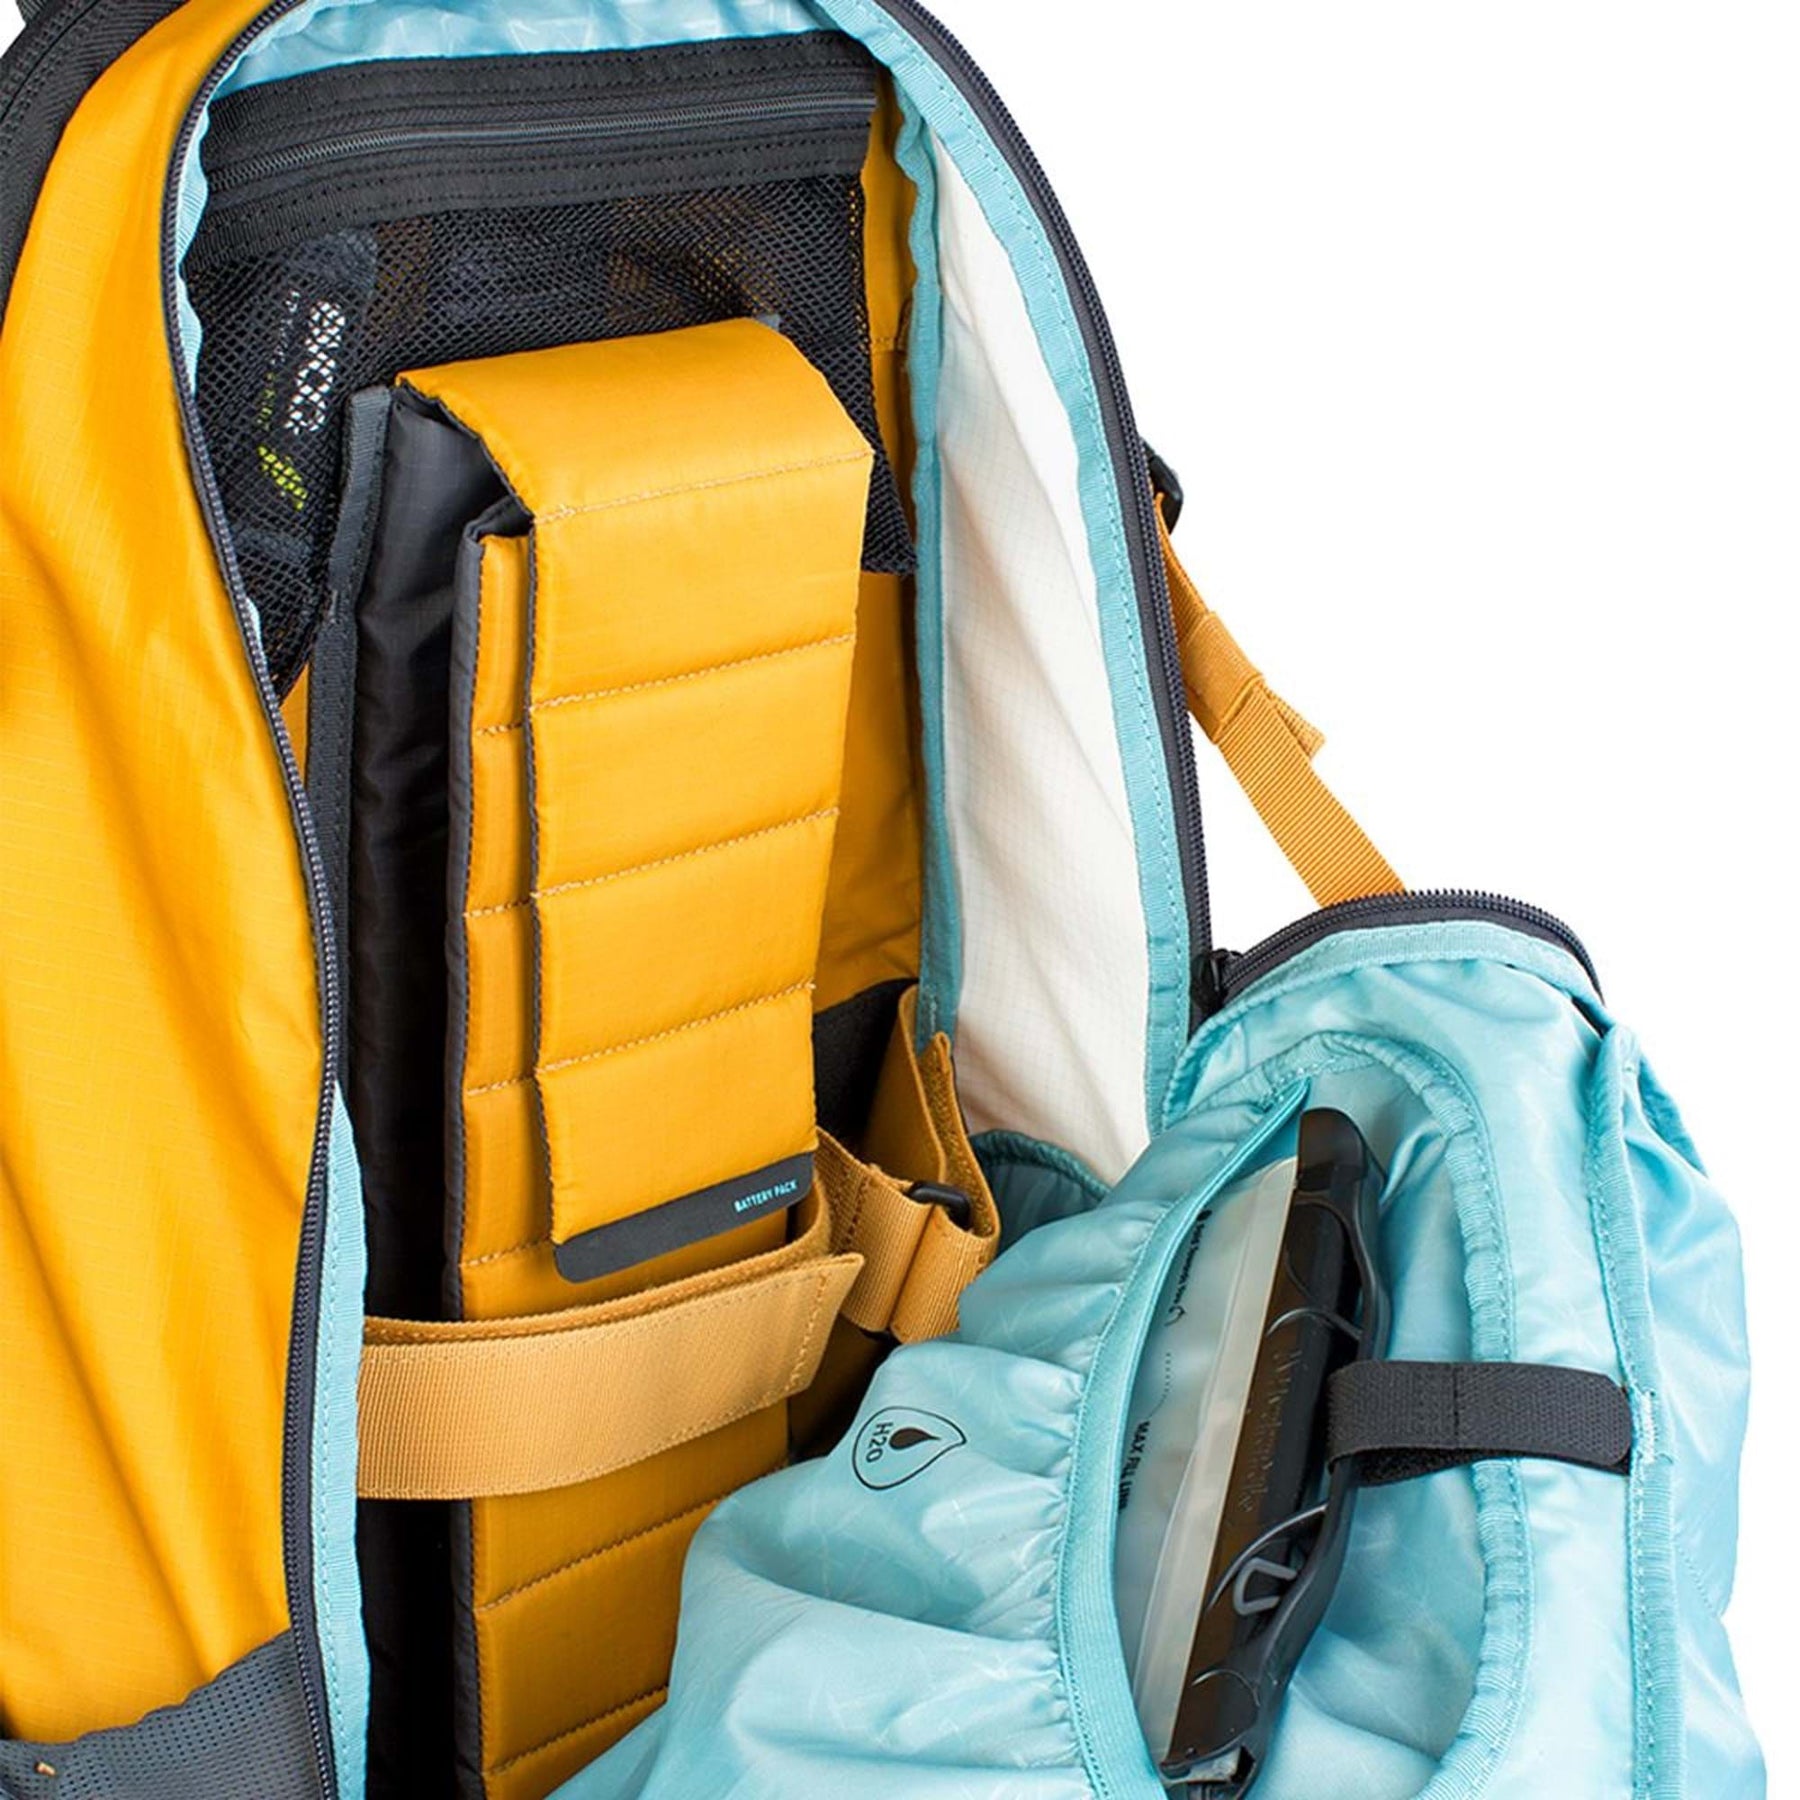 Evoc FR Trail E-Ride Protector Backpack